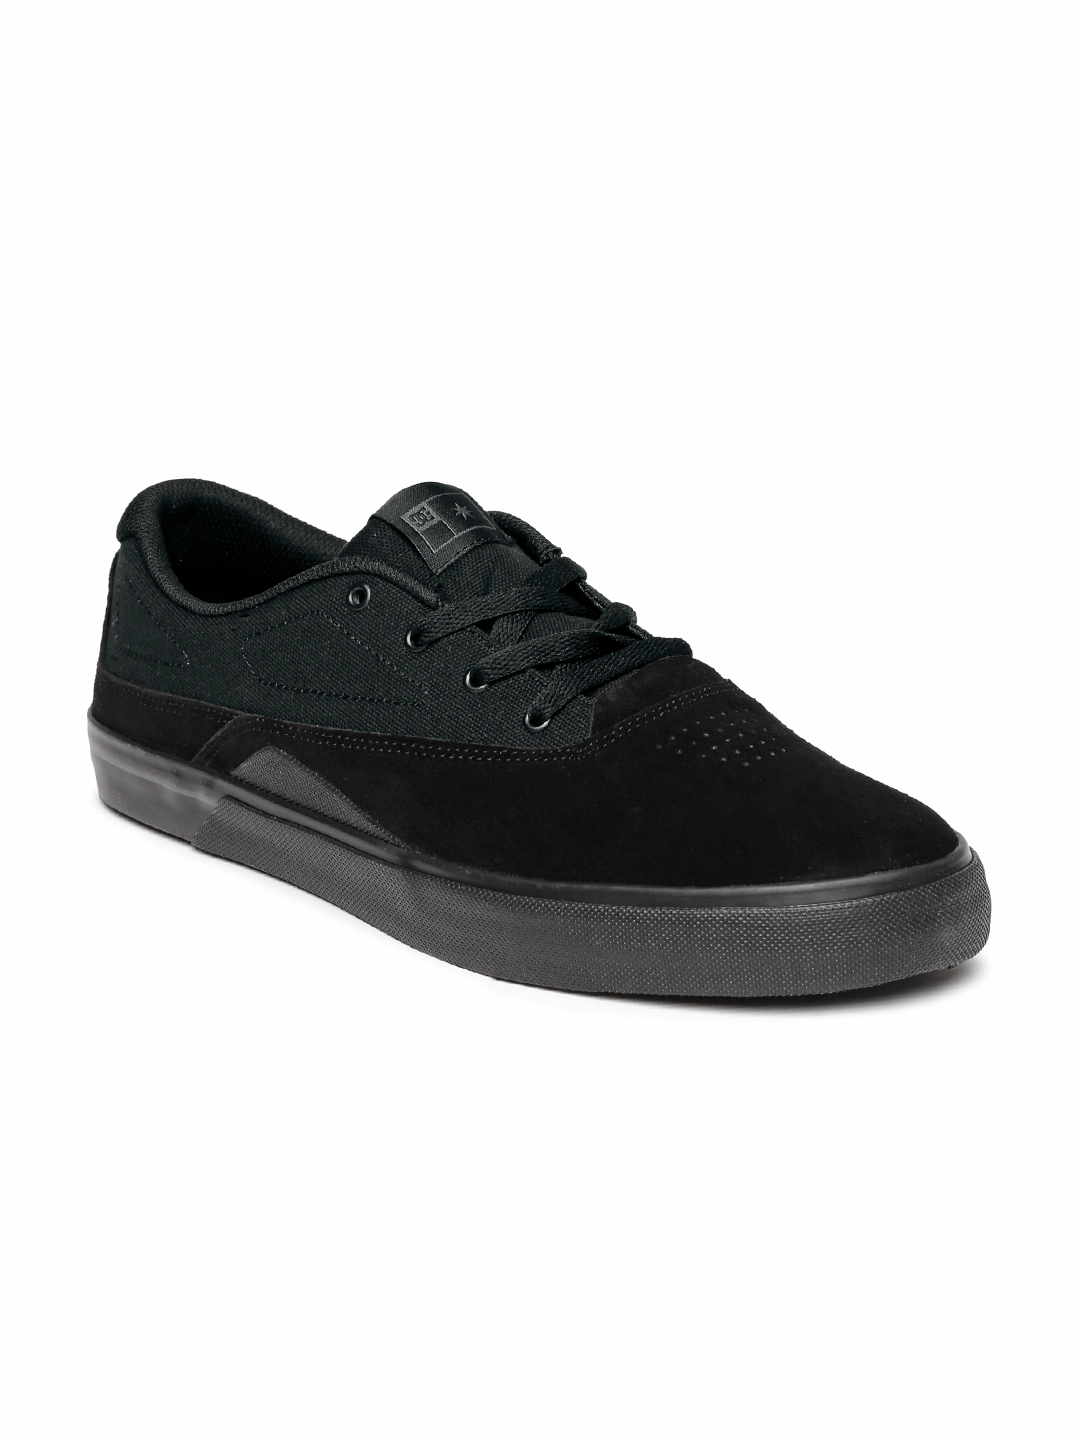 Buy DC Men Black Super Suede Sneakers - Casual Shoes for Men 1432673 ...